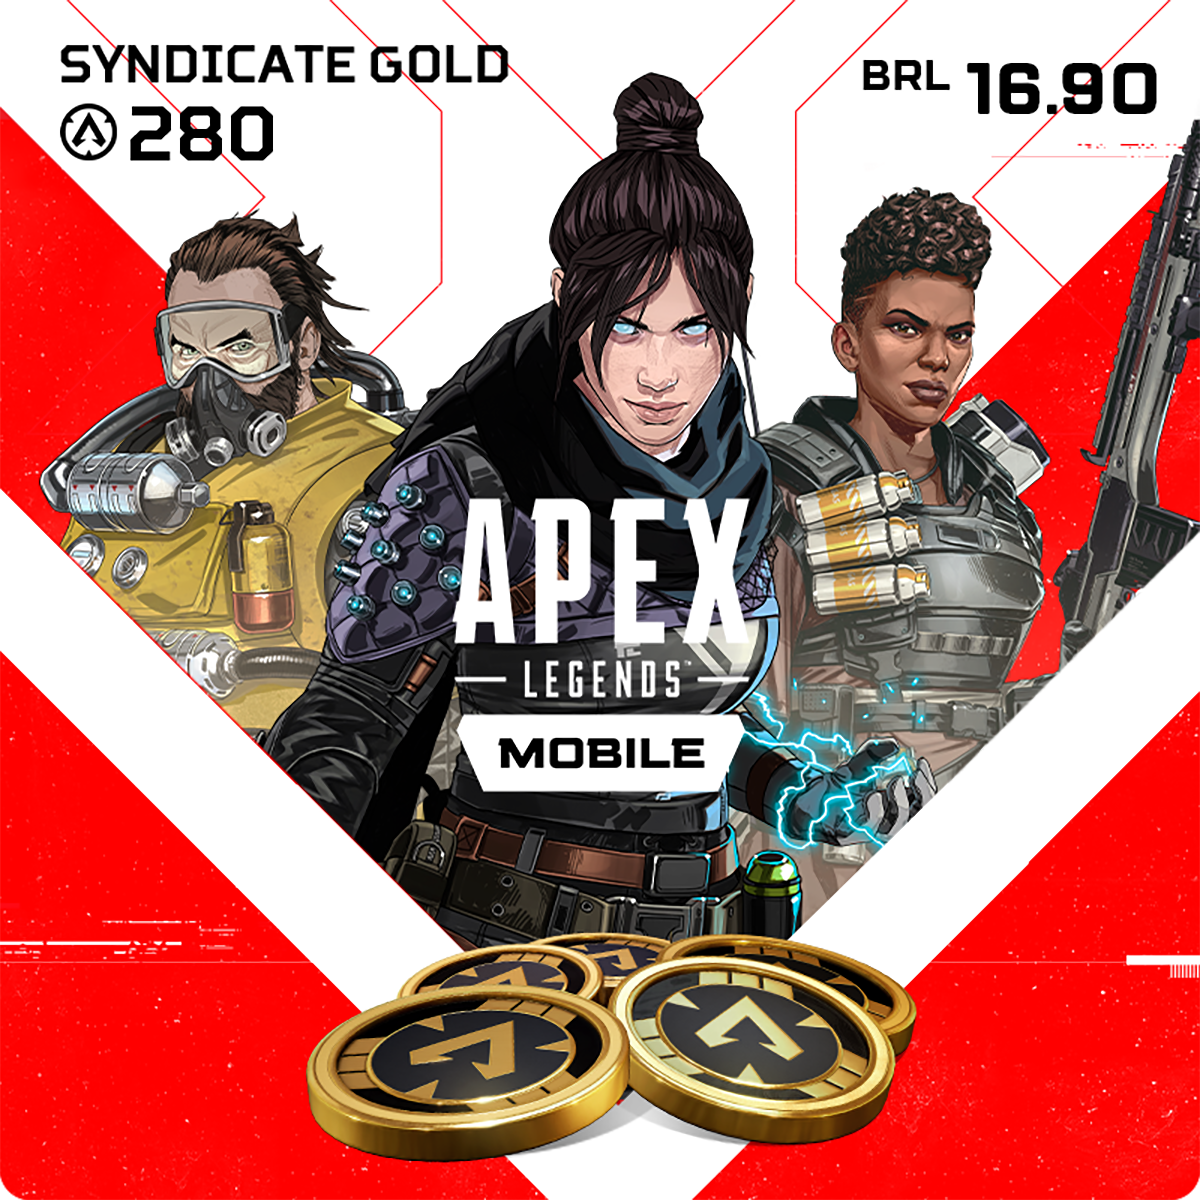 comprar-apex-legends-mobile-280-syndicate-gold-trivia-pw